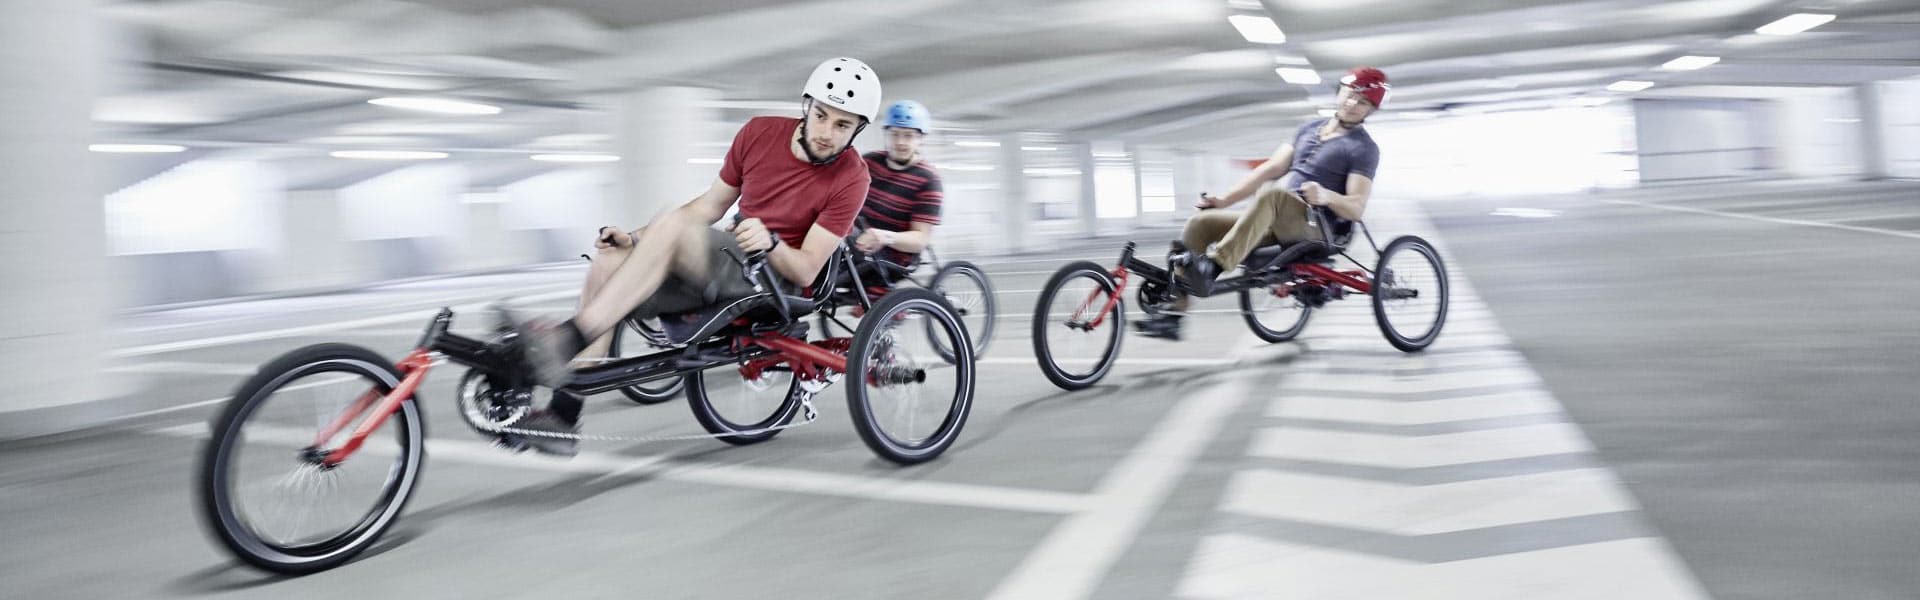 Hase Bikes Moodbild HASE BIKES e-Bikes in der e-motion e-Bike Welt in Bad Hall